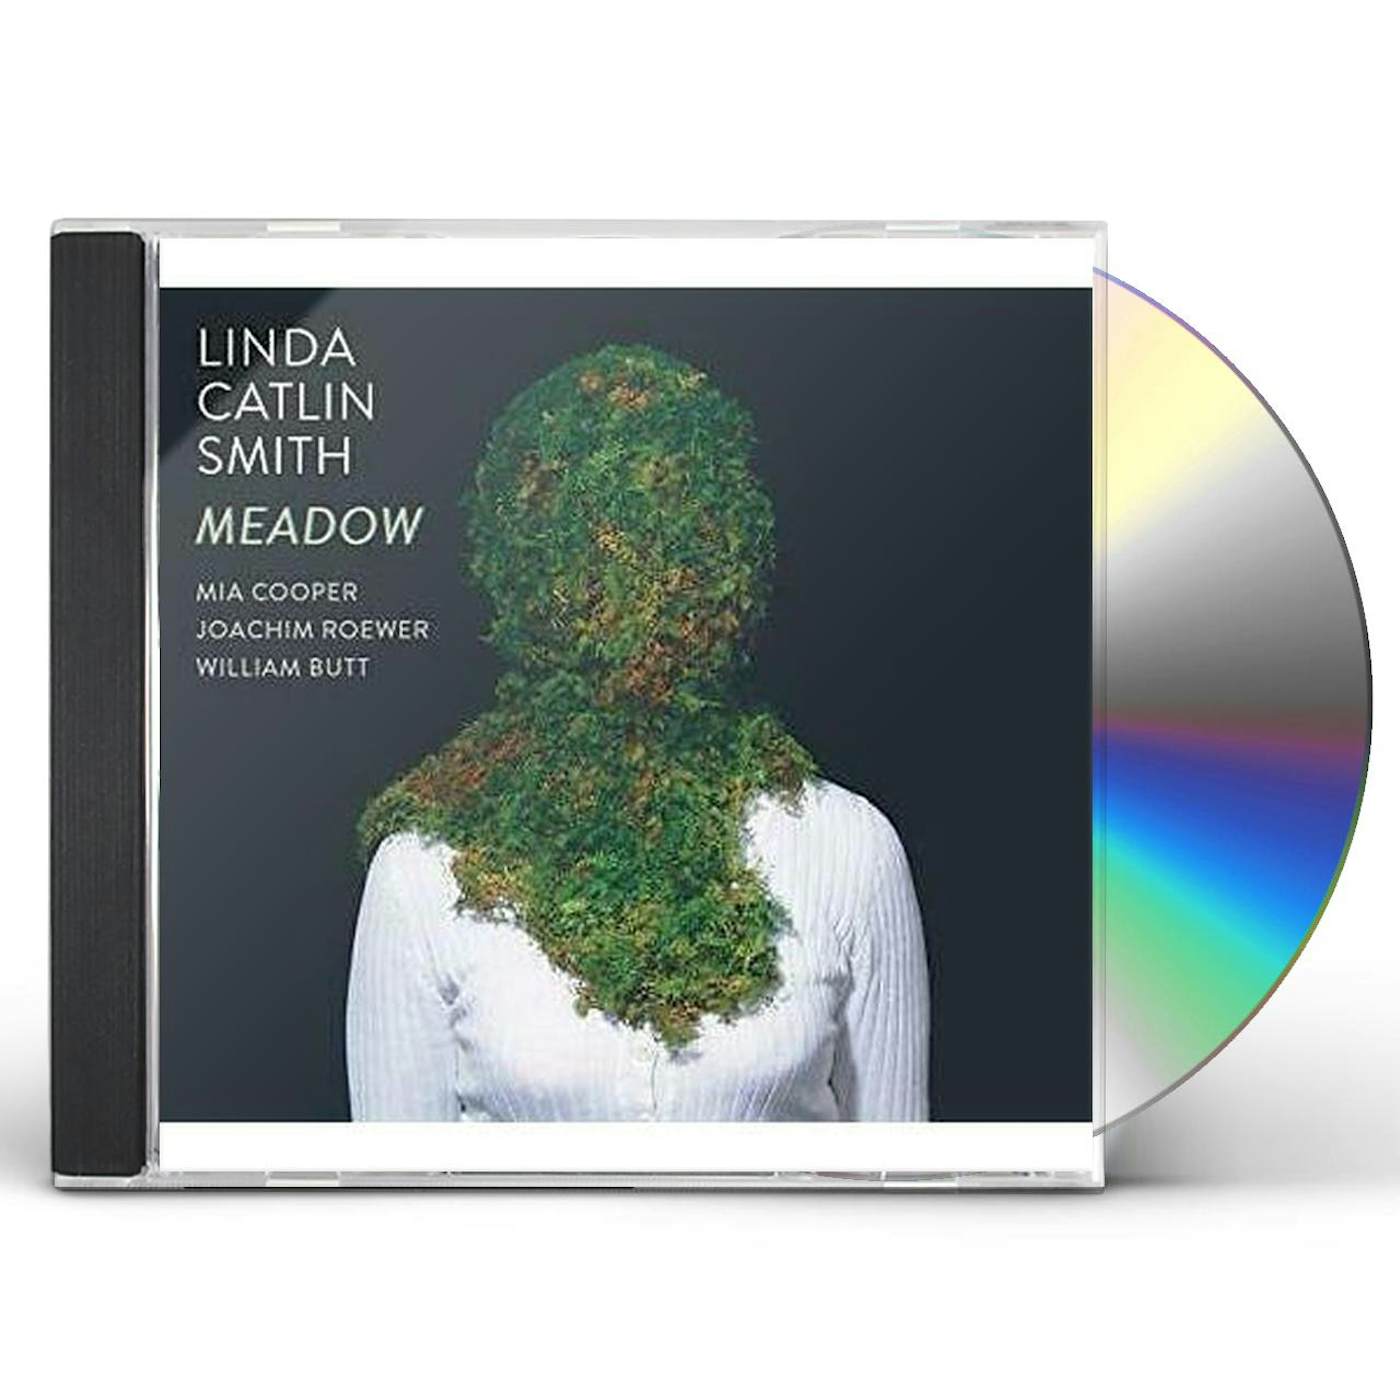 Linda Catlin Smith MEADOW CD